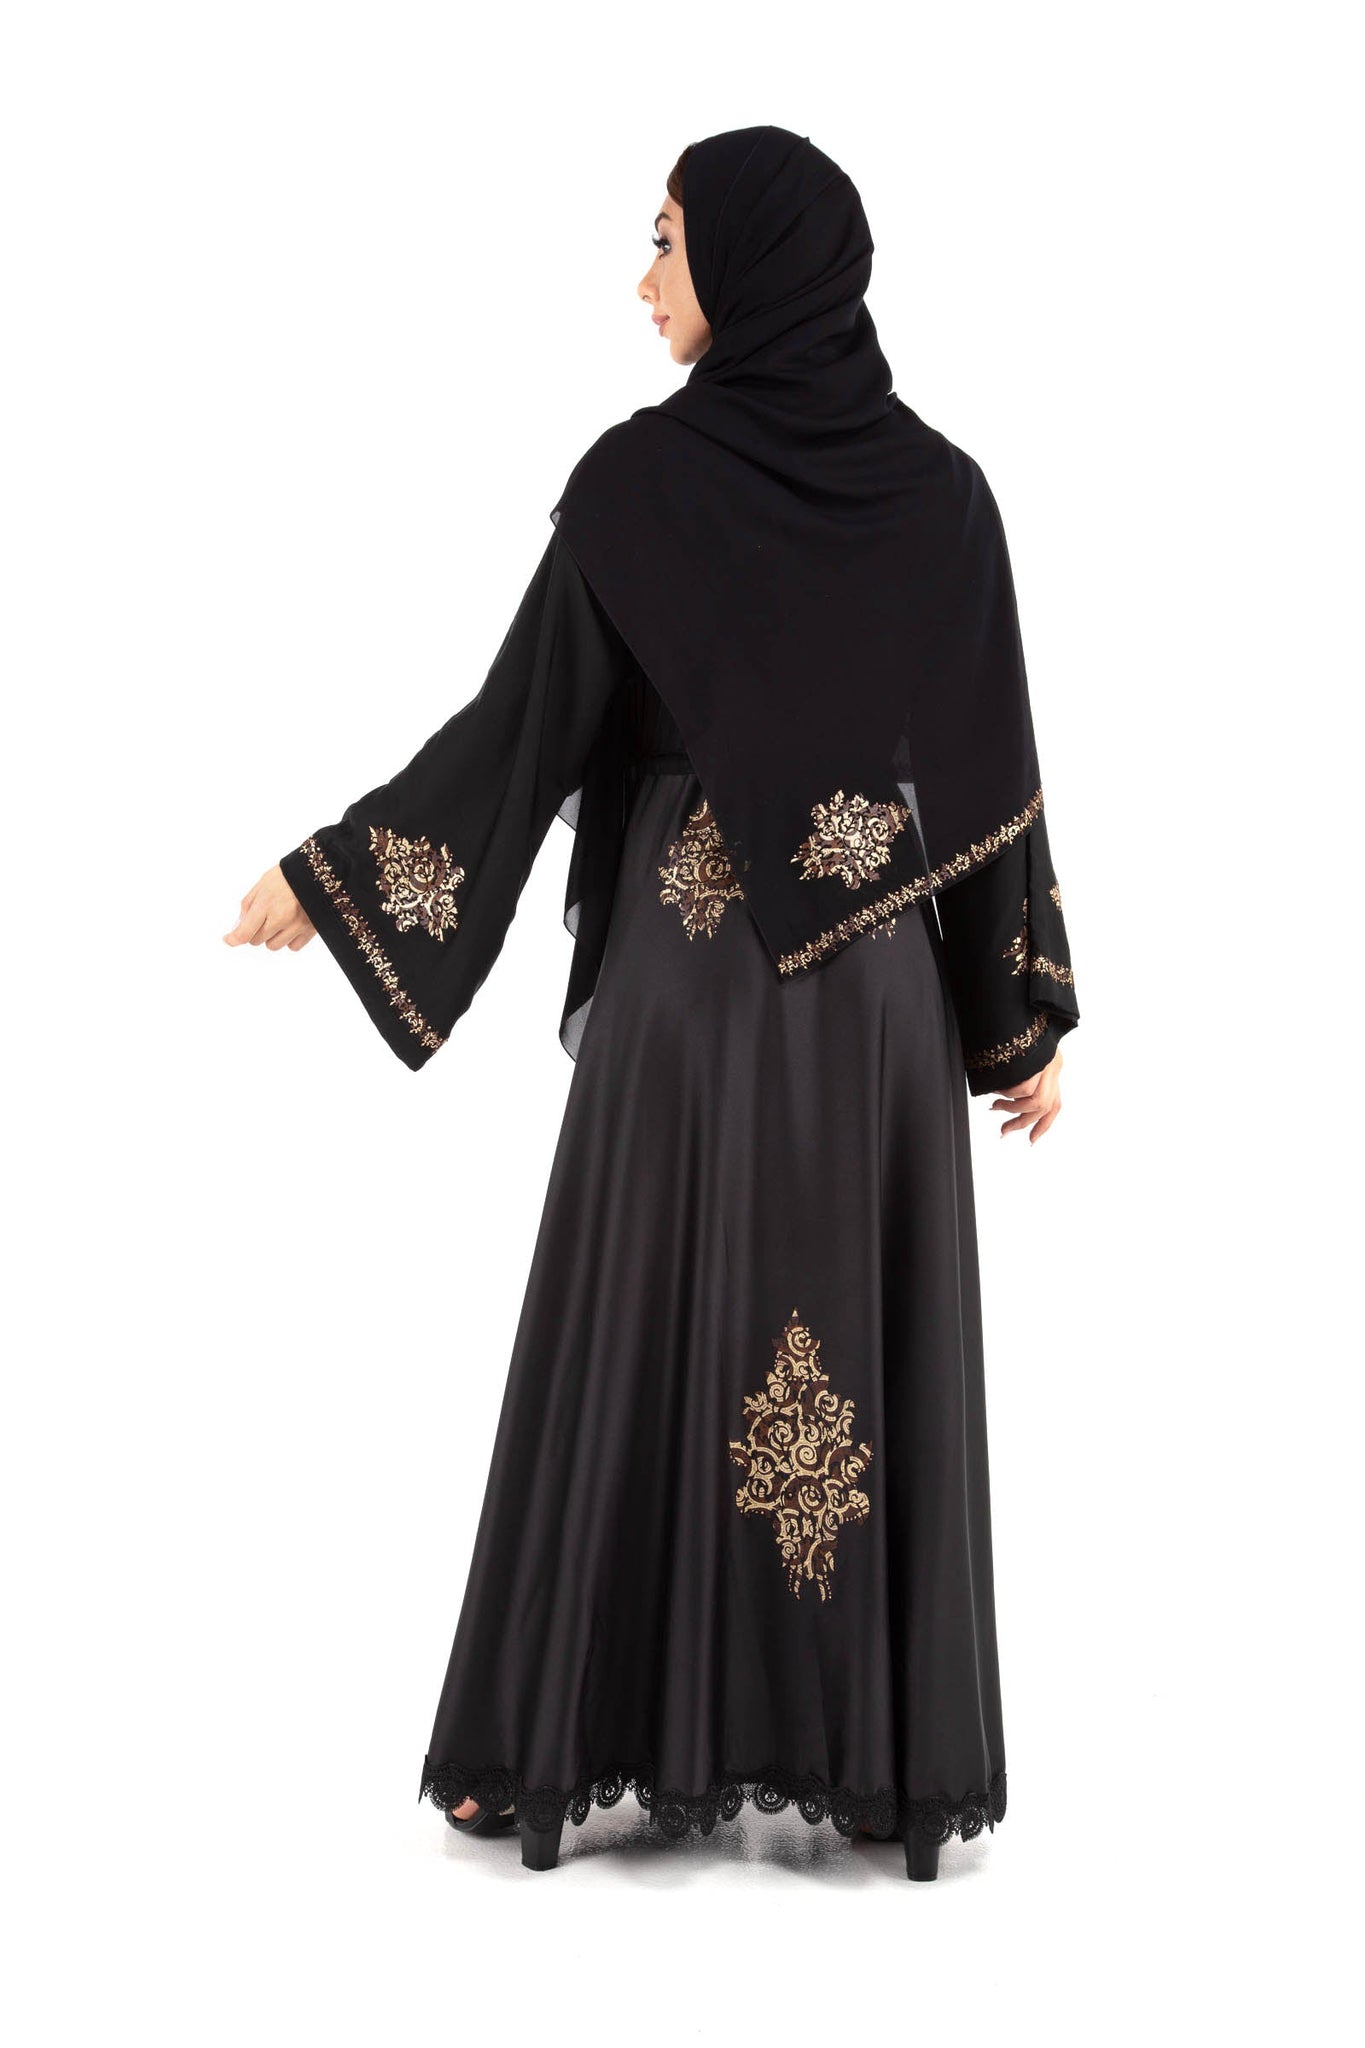 Hanayen Black Abaya With Belt And Prints